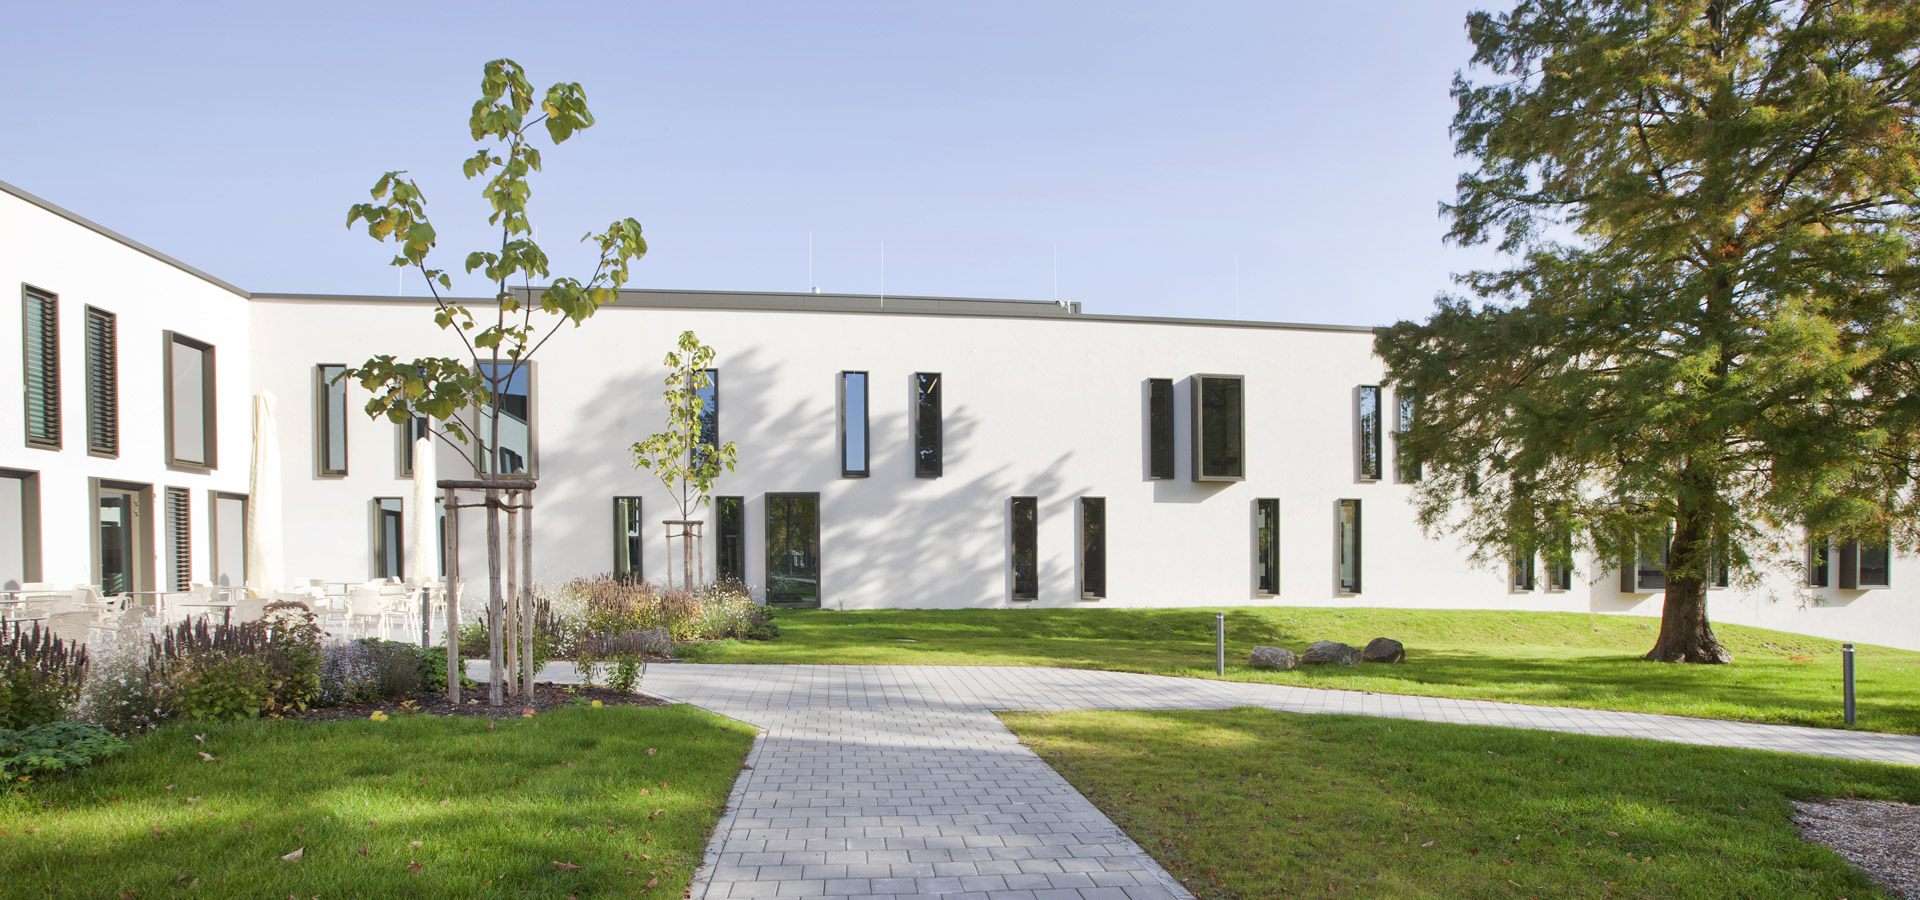 Gartenhof Ksters - St. Augustinus Klinik, Neuss